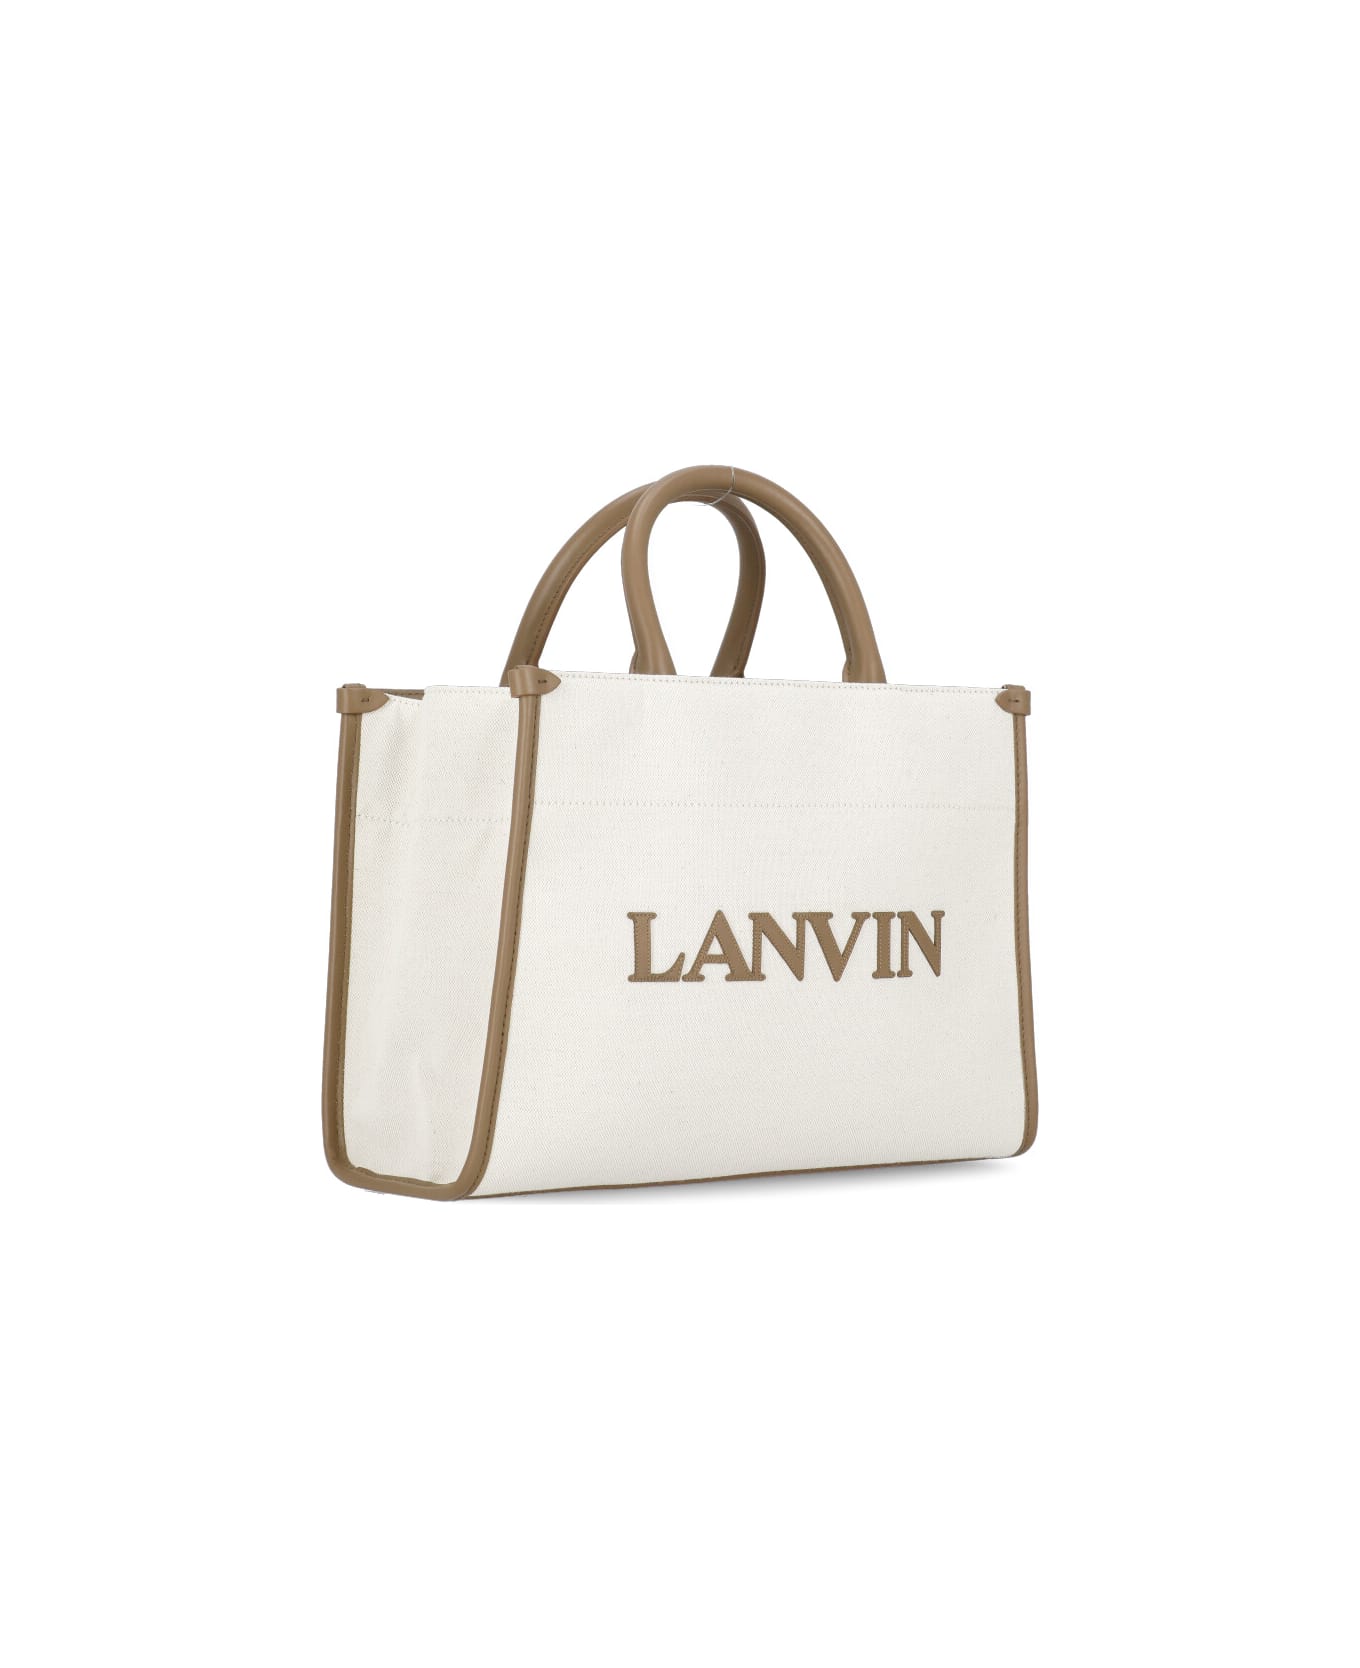 Lanvin Logo Canvas Shopping Bag - Beige